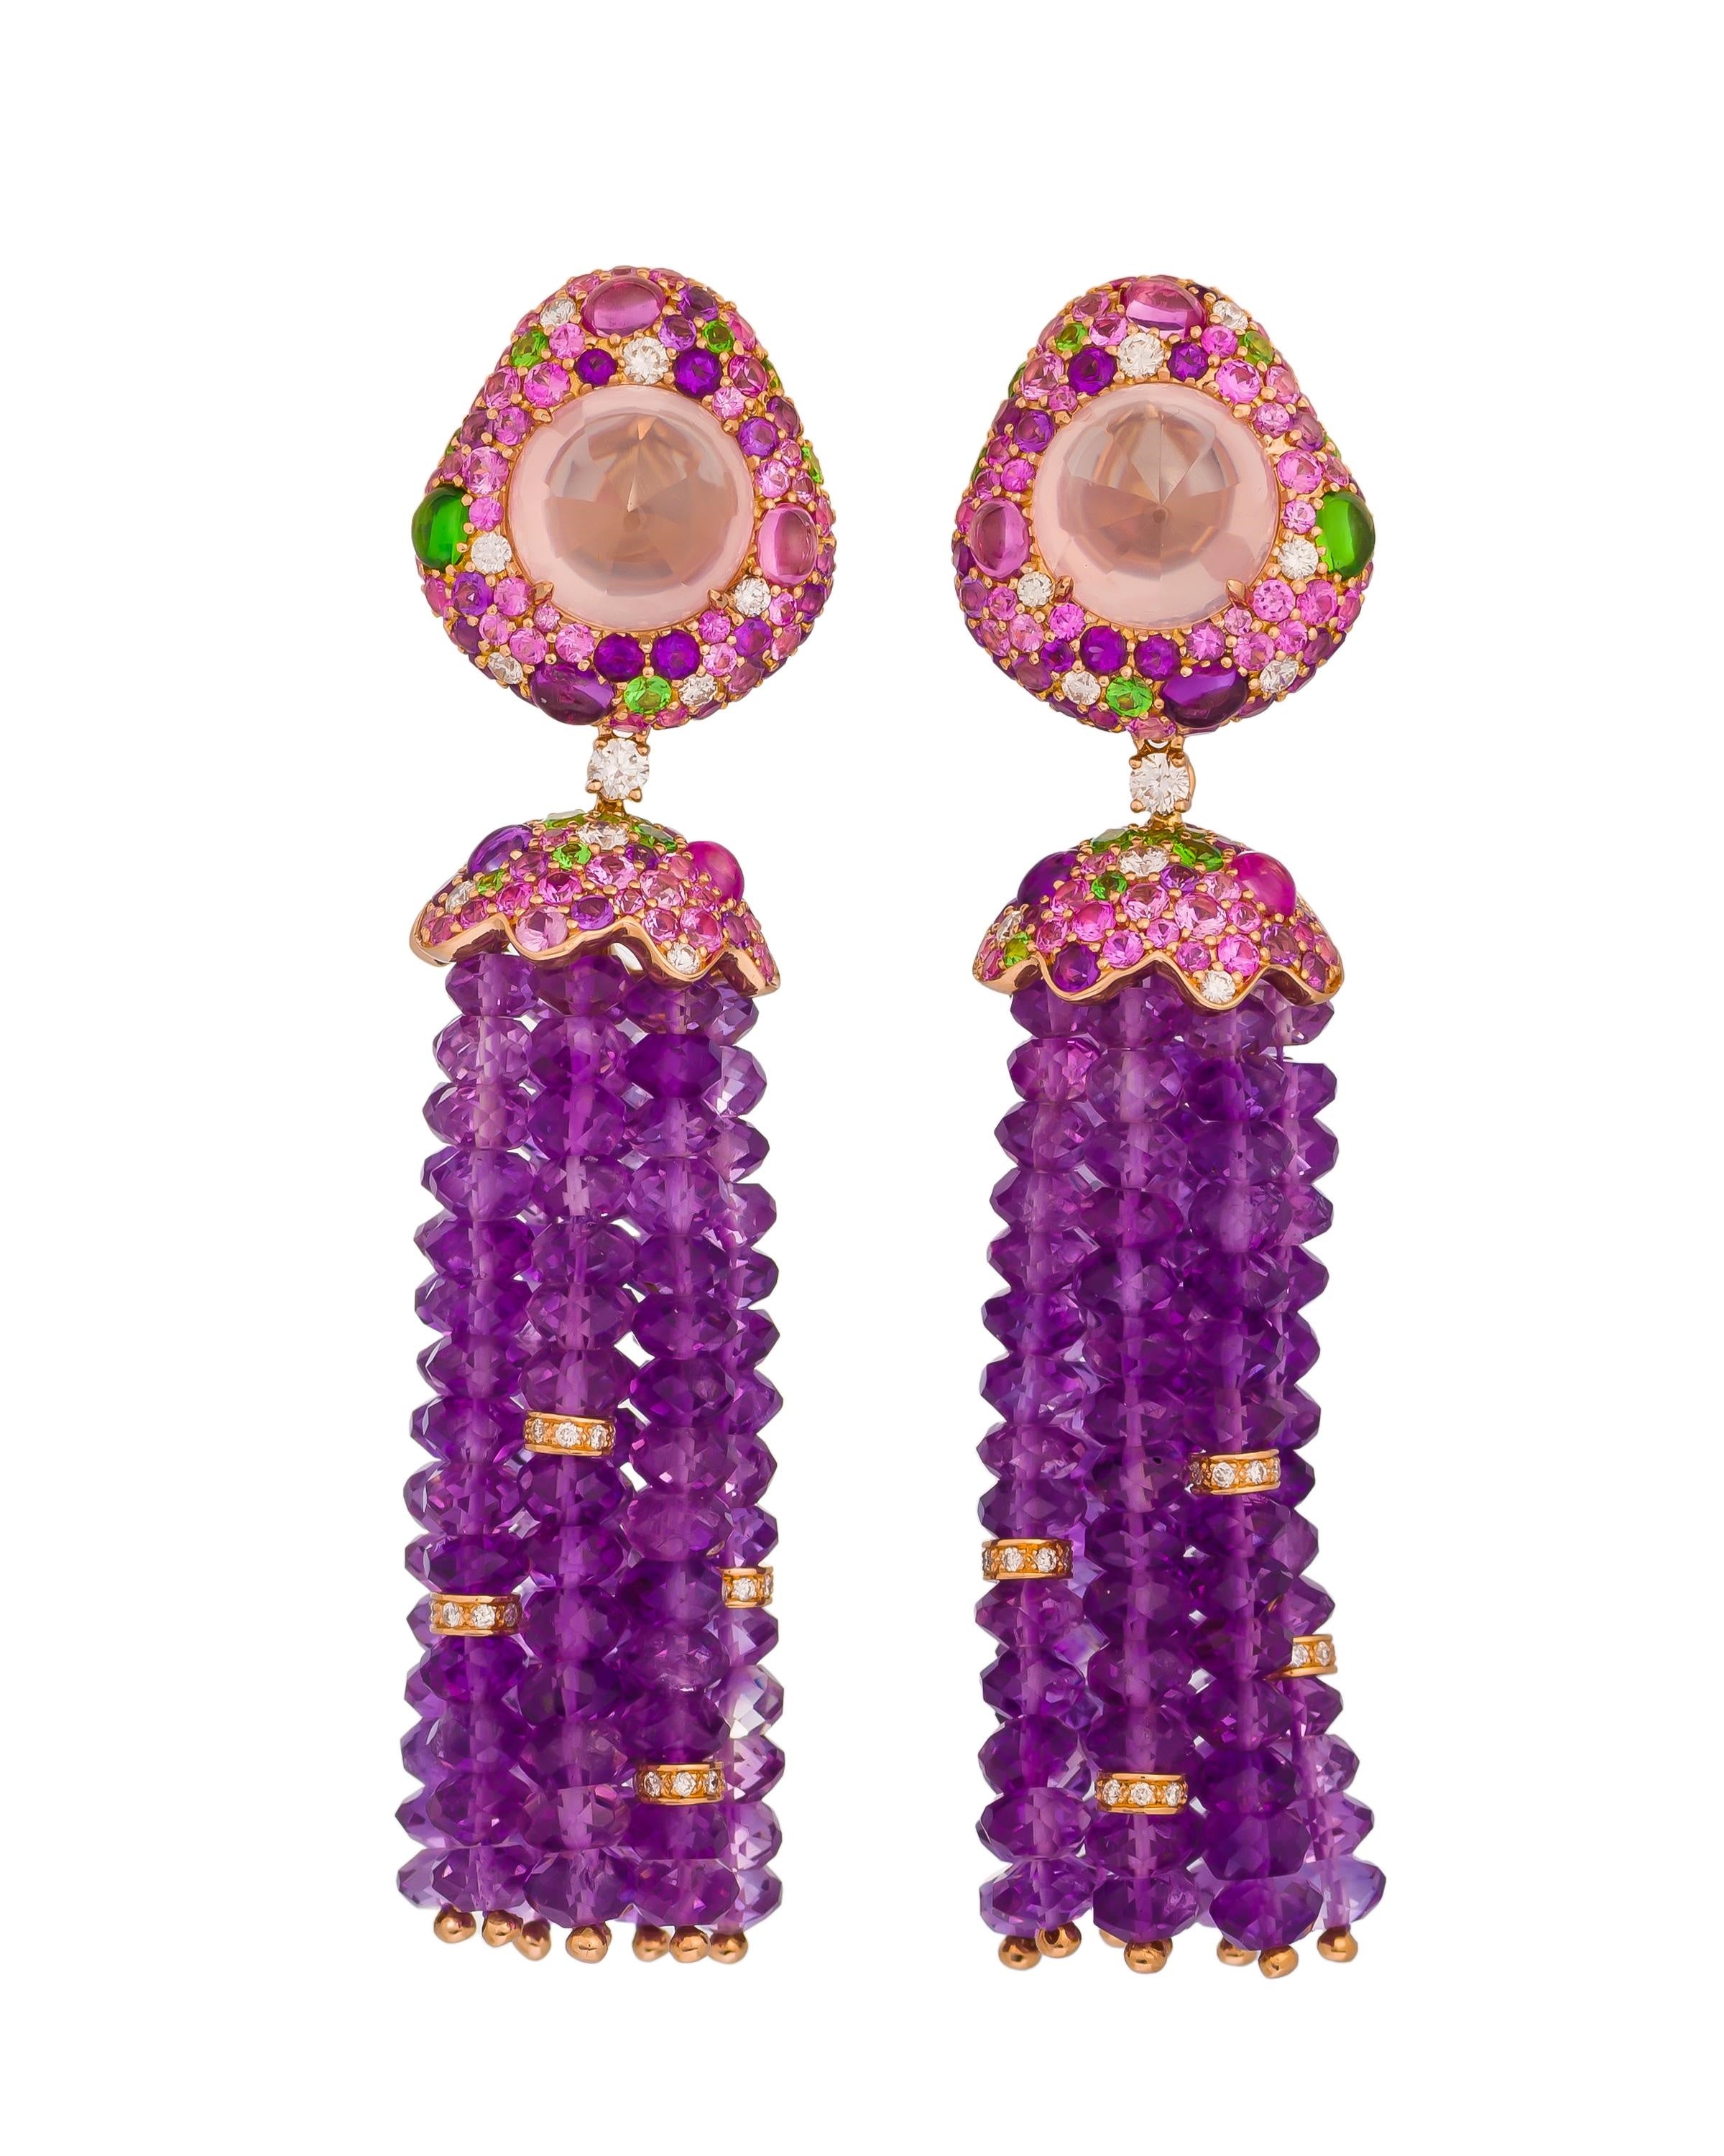 Amethyst tassel earrings with rose quartz tops enhanced with a myriad of gemstones, crafted in 18 karat rose gold